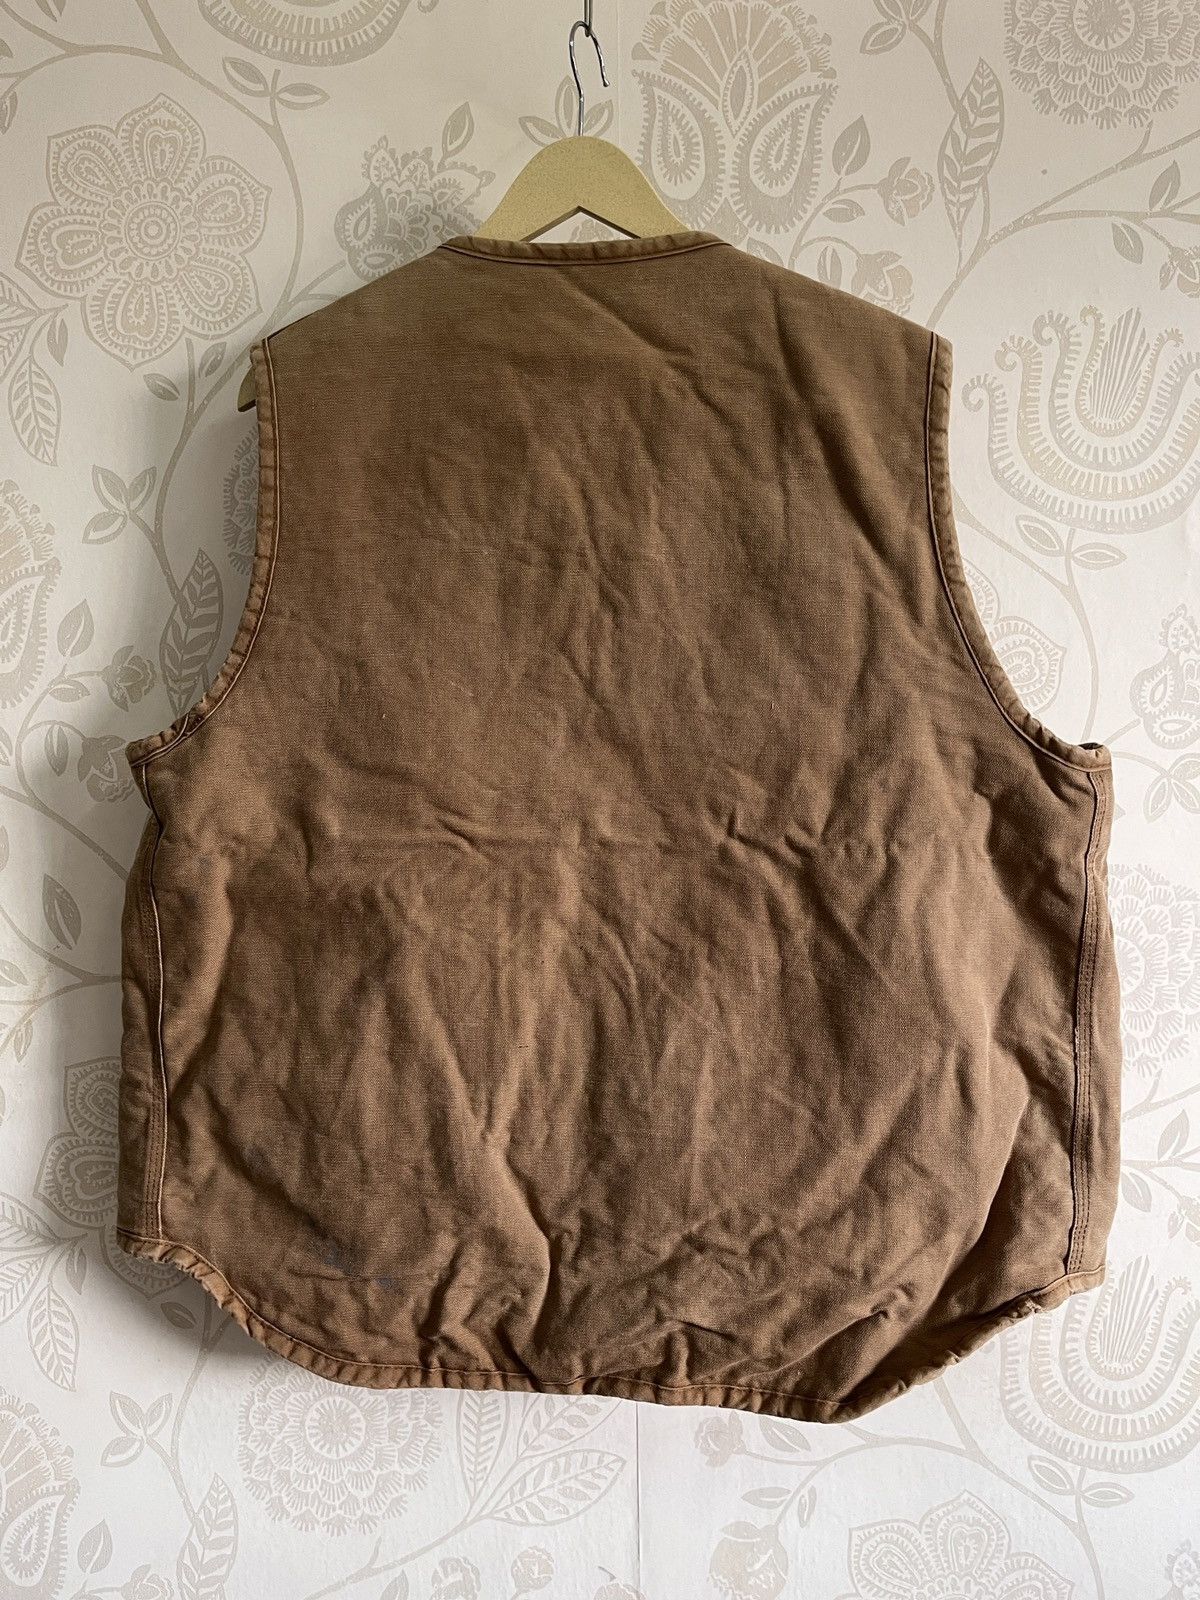 Carhartt Vest Denim 1980s Vintage Blanket - 11